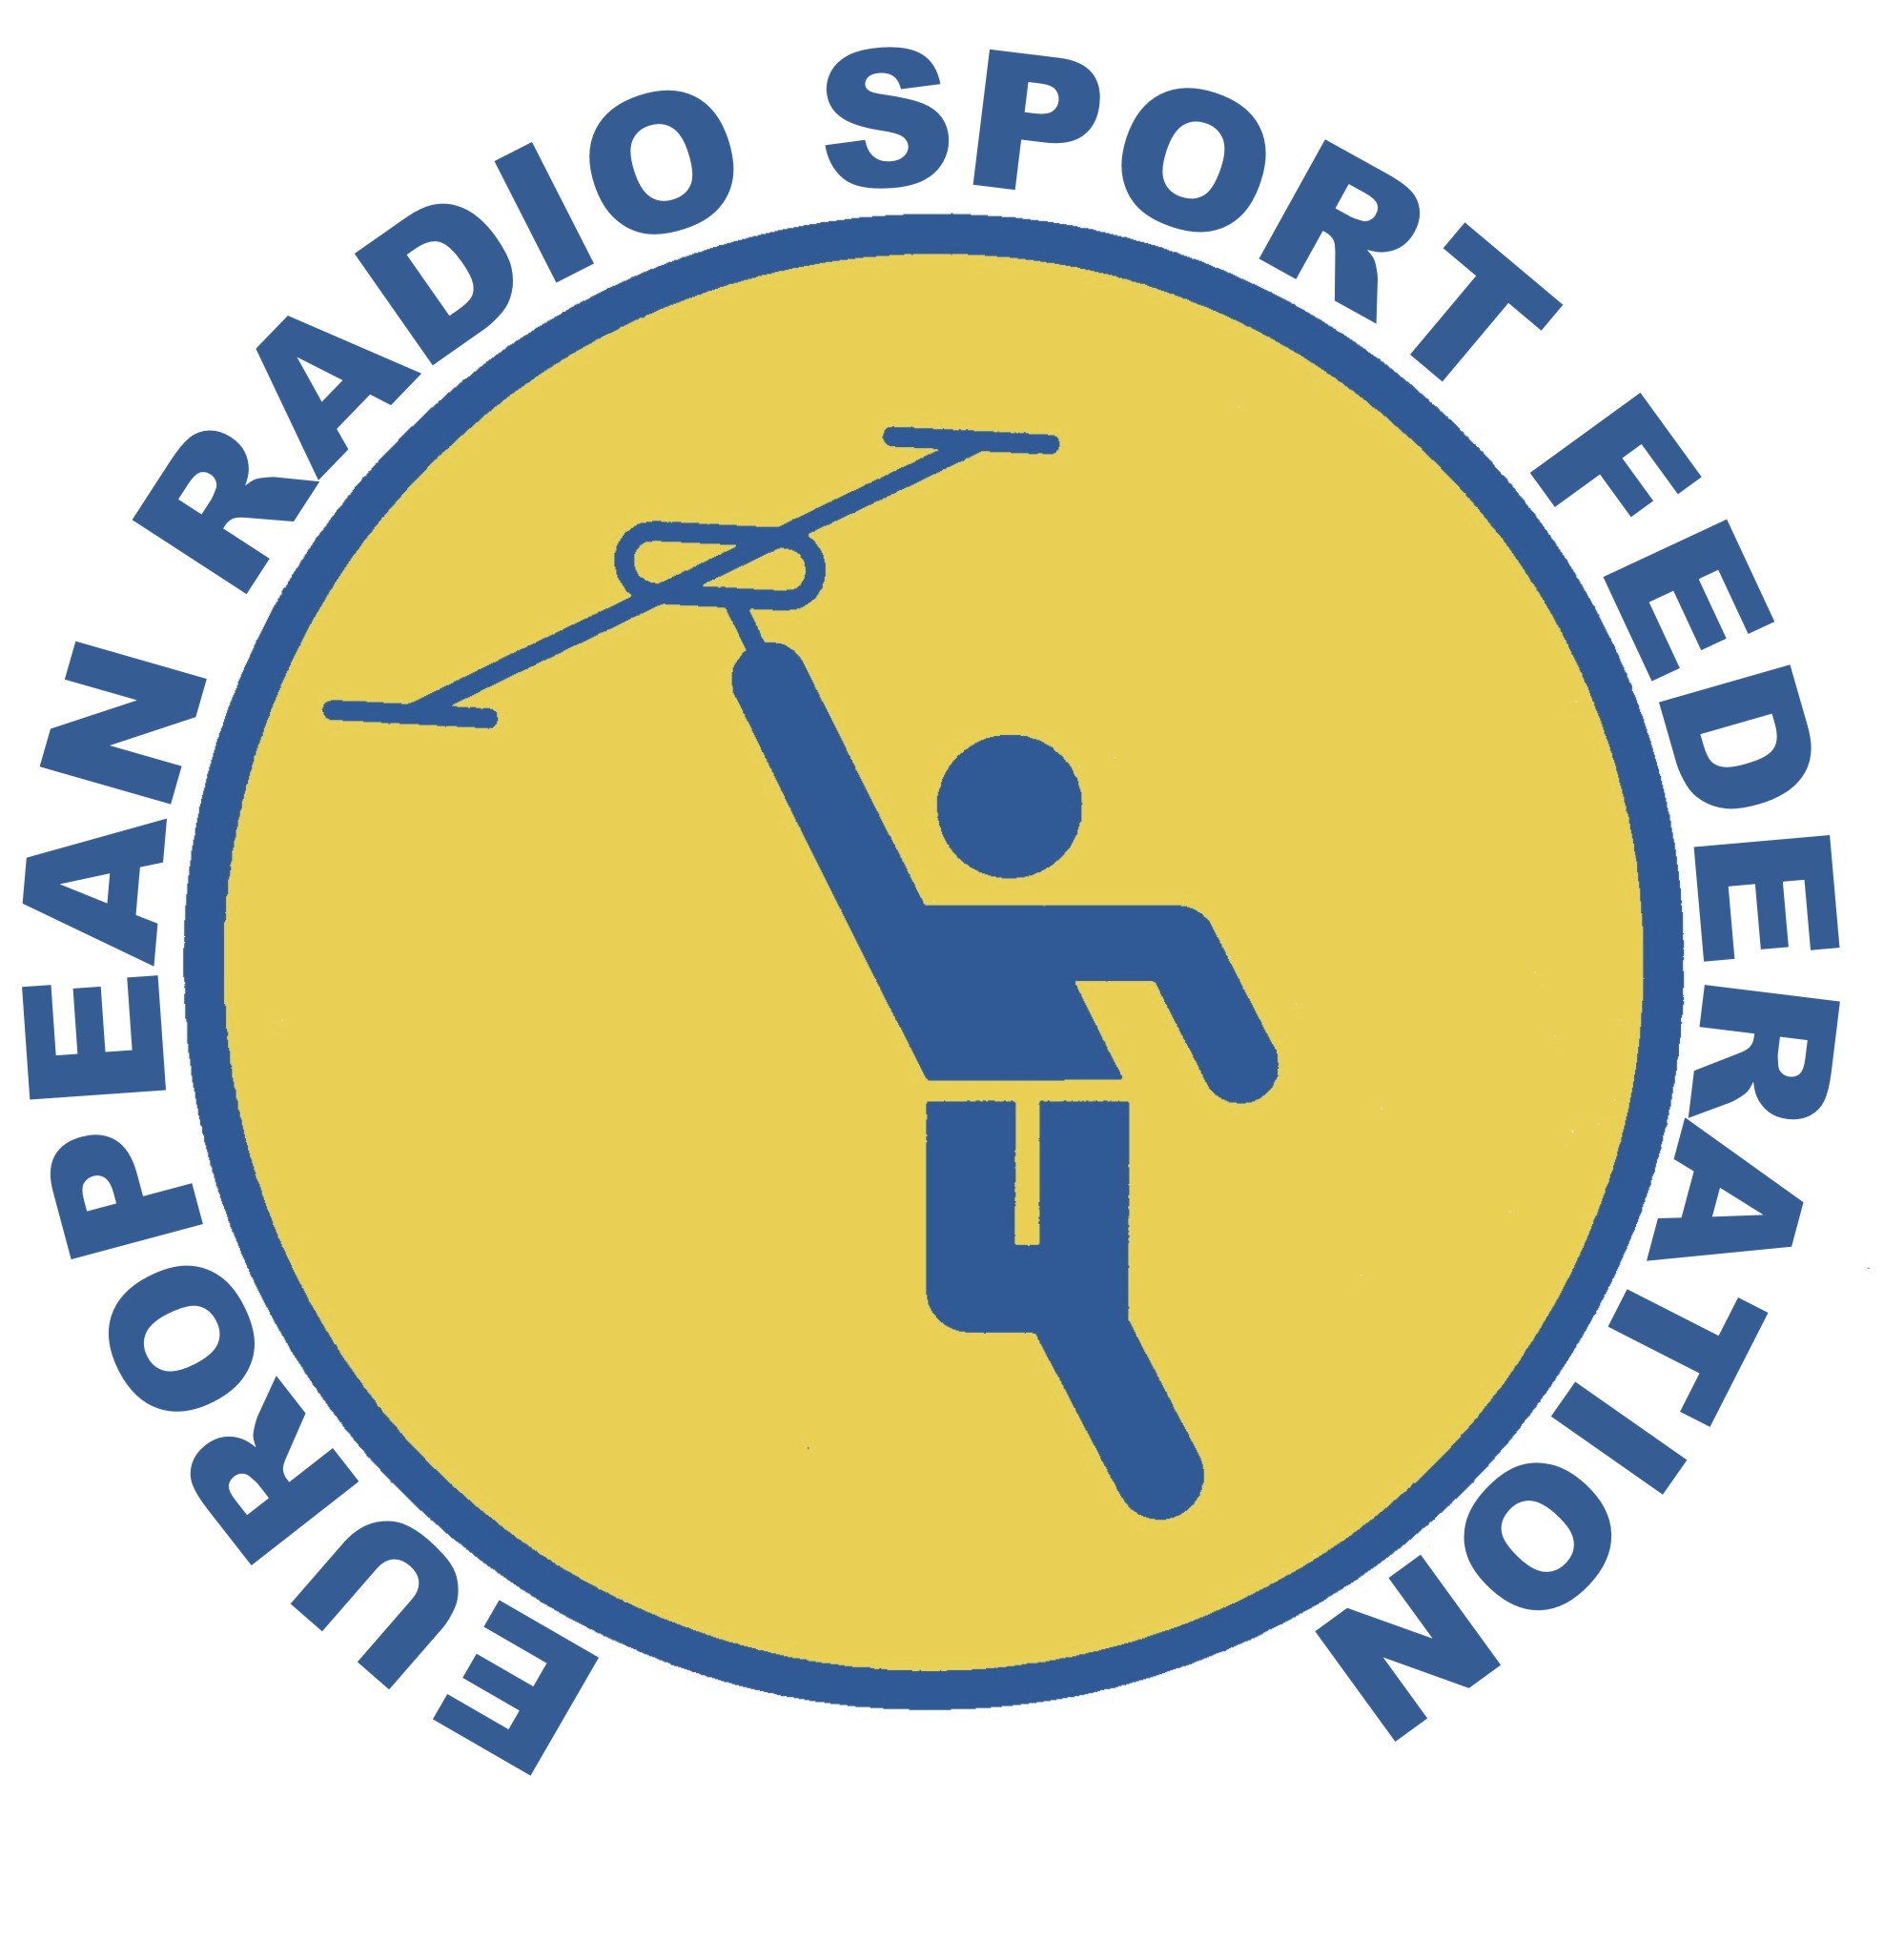 European radio sport federation